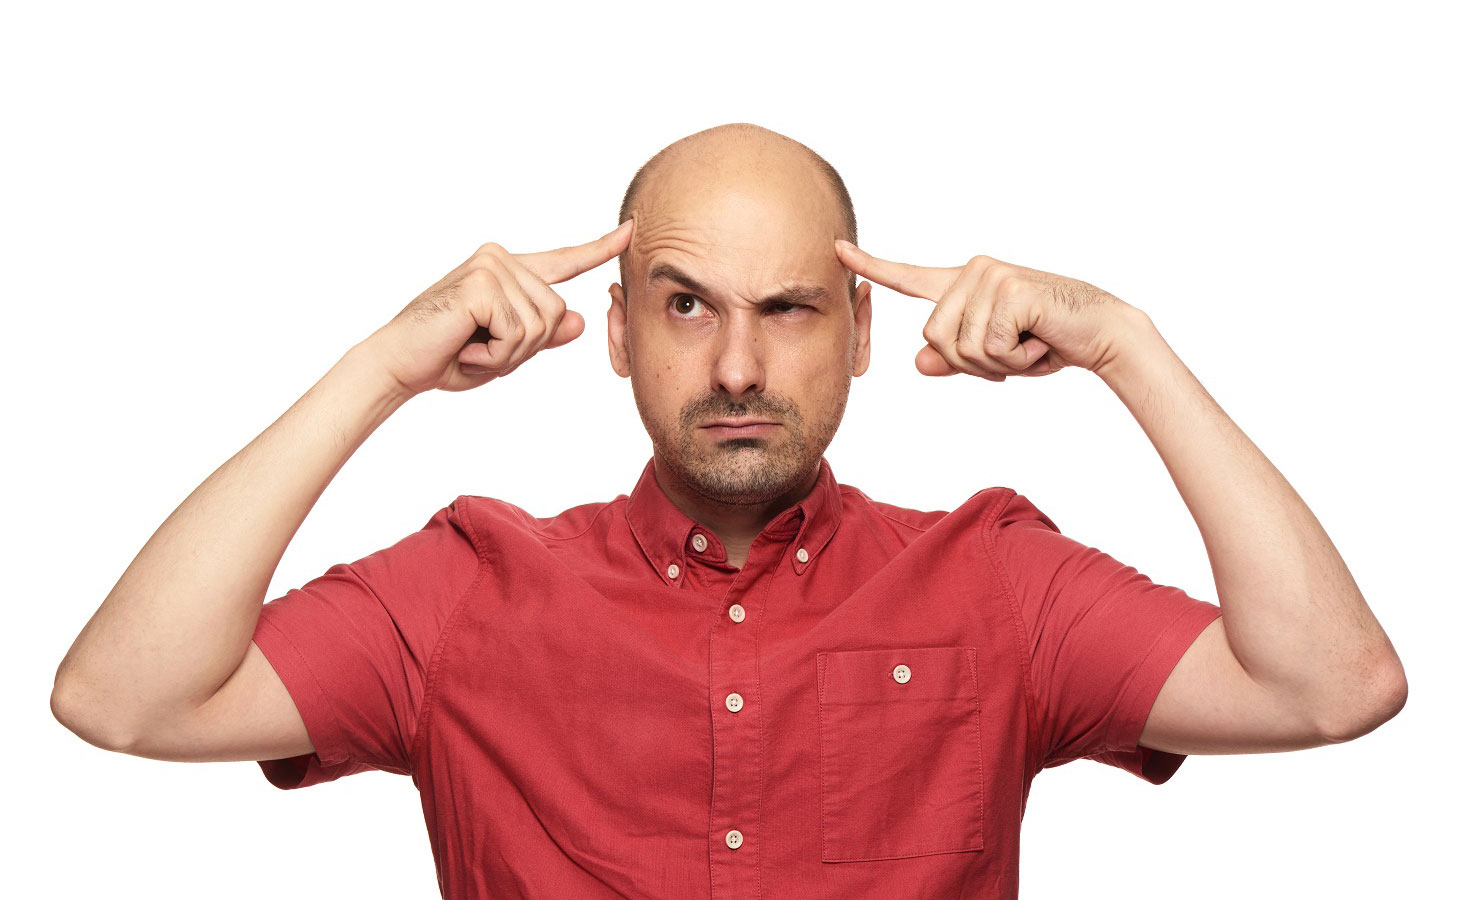 Why do men go bald?